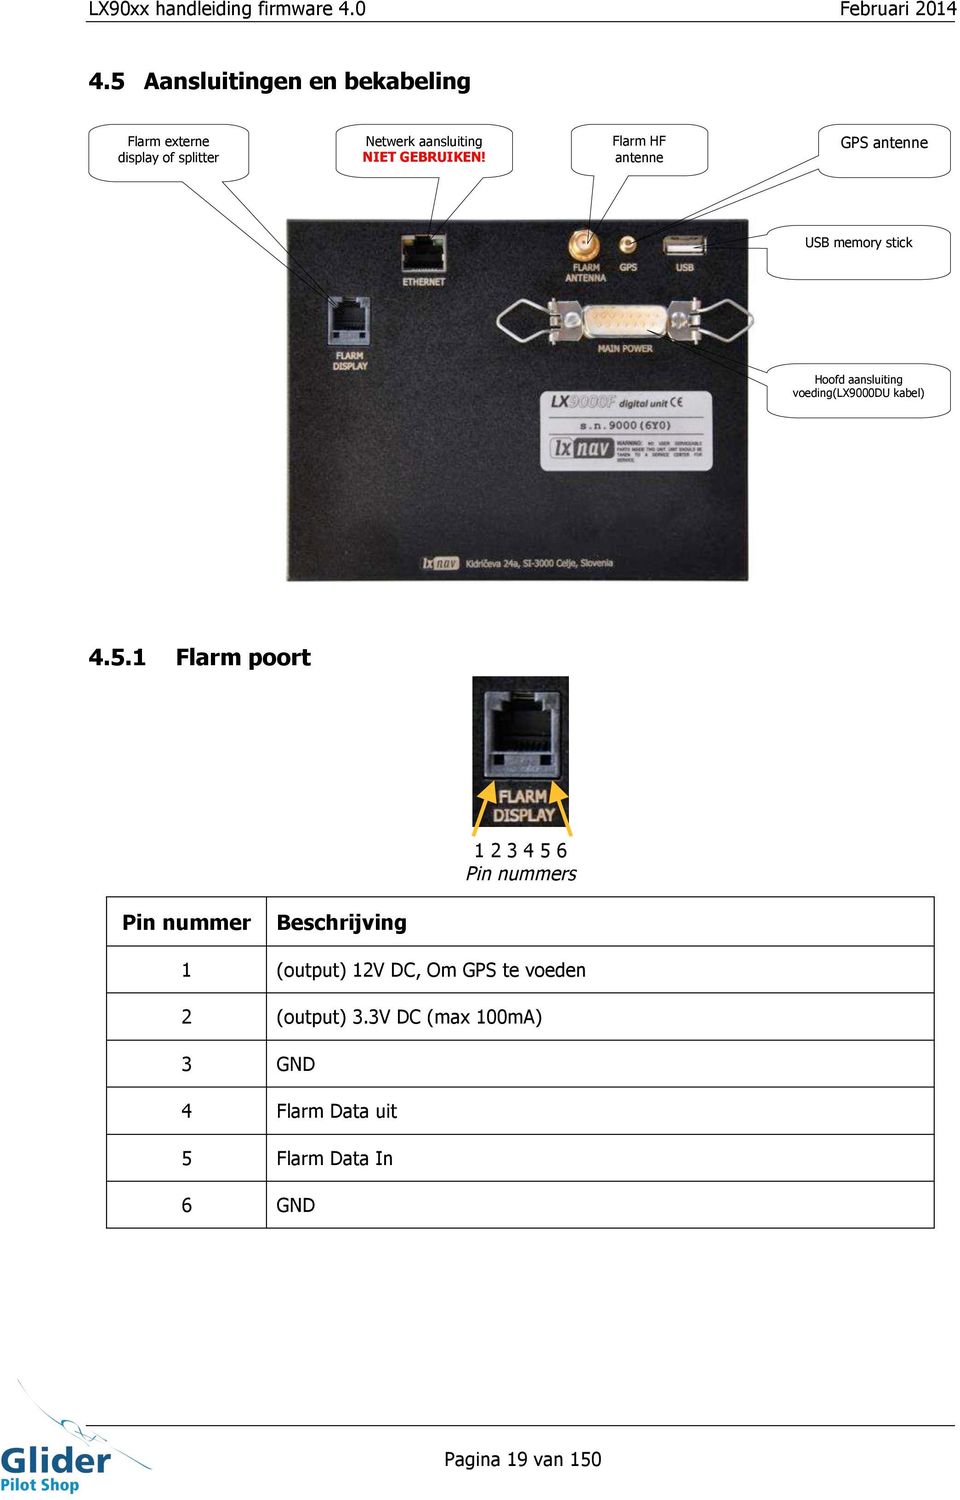 Flarm HF antenne GPS antenne USB memory stick Hoofd aansluiting voeding(lx9000du kabel) 4.5.